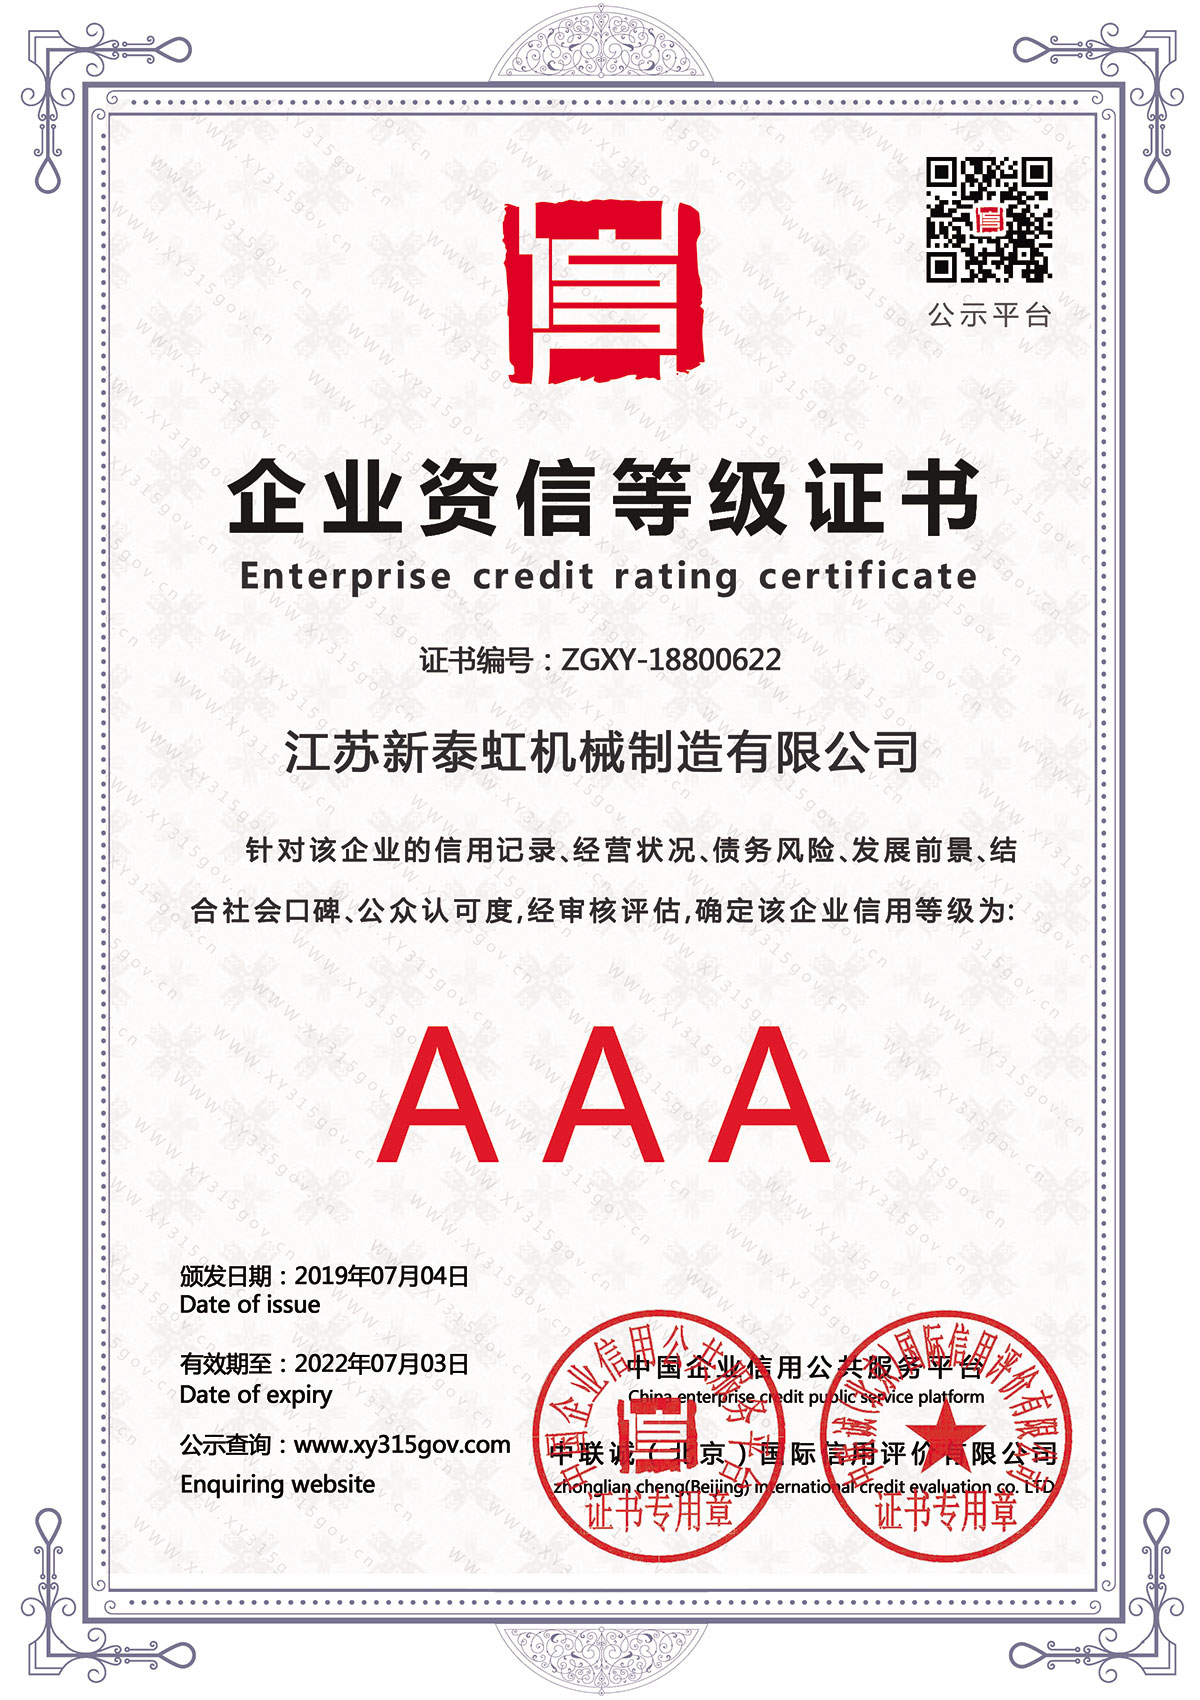 Eenterprise credit rating certificate